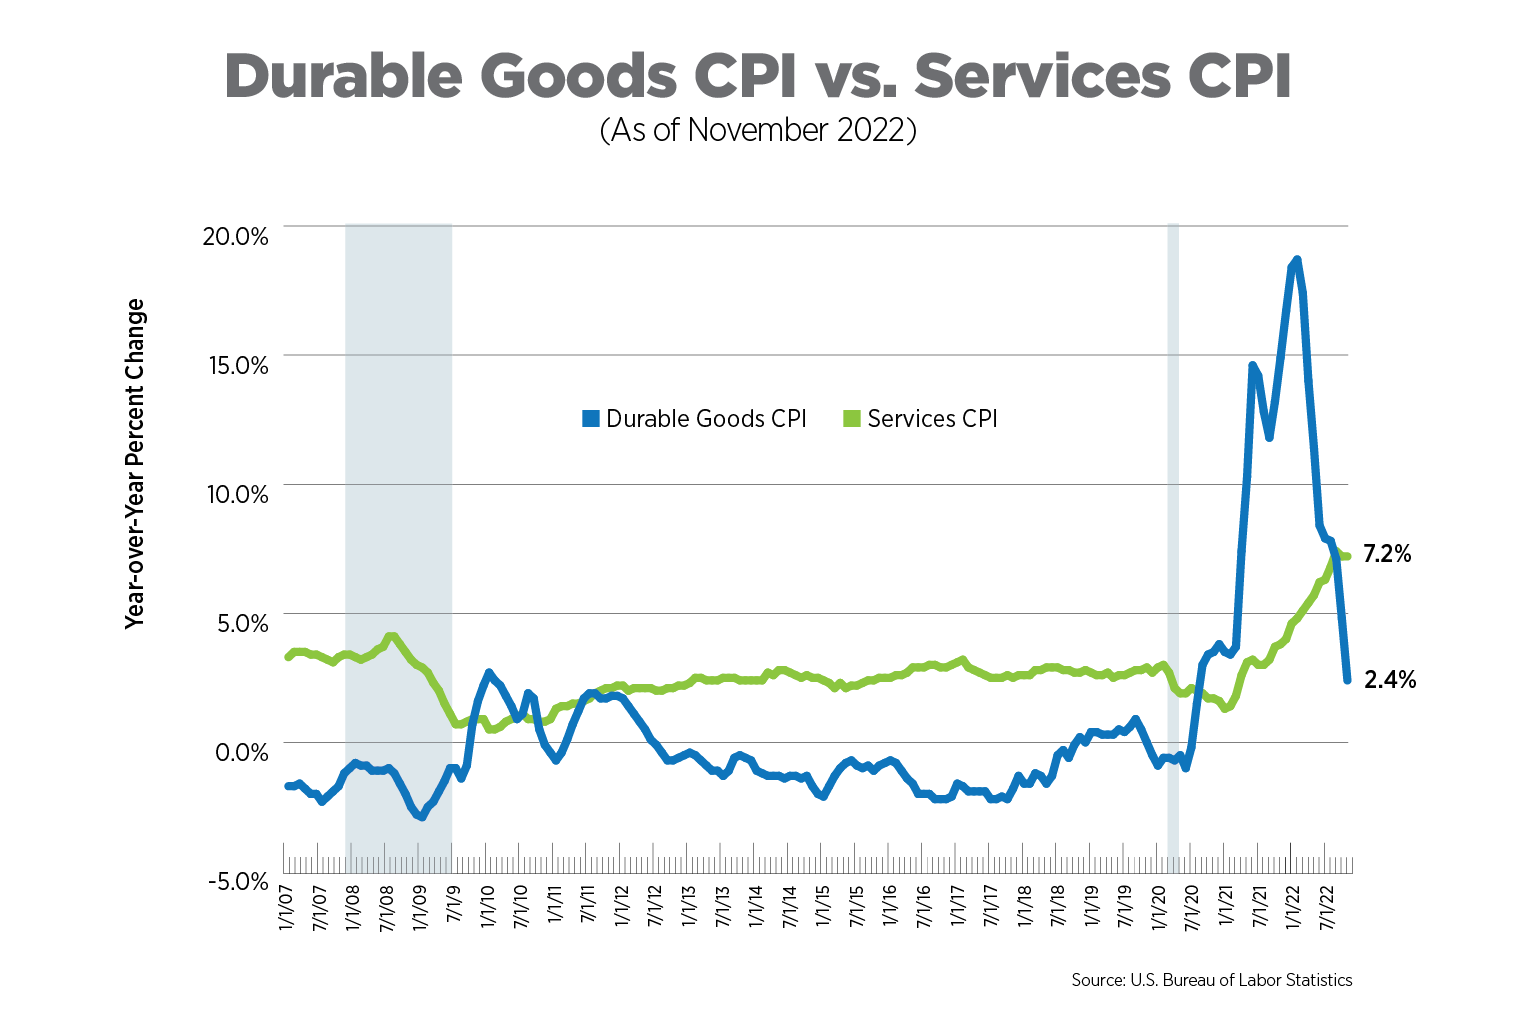 durable goods cpi vs services cpi as of november 2022